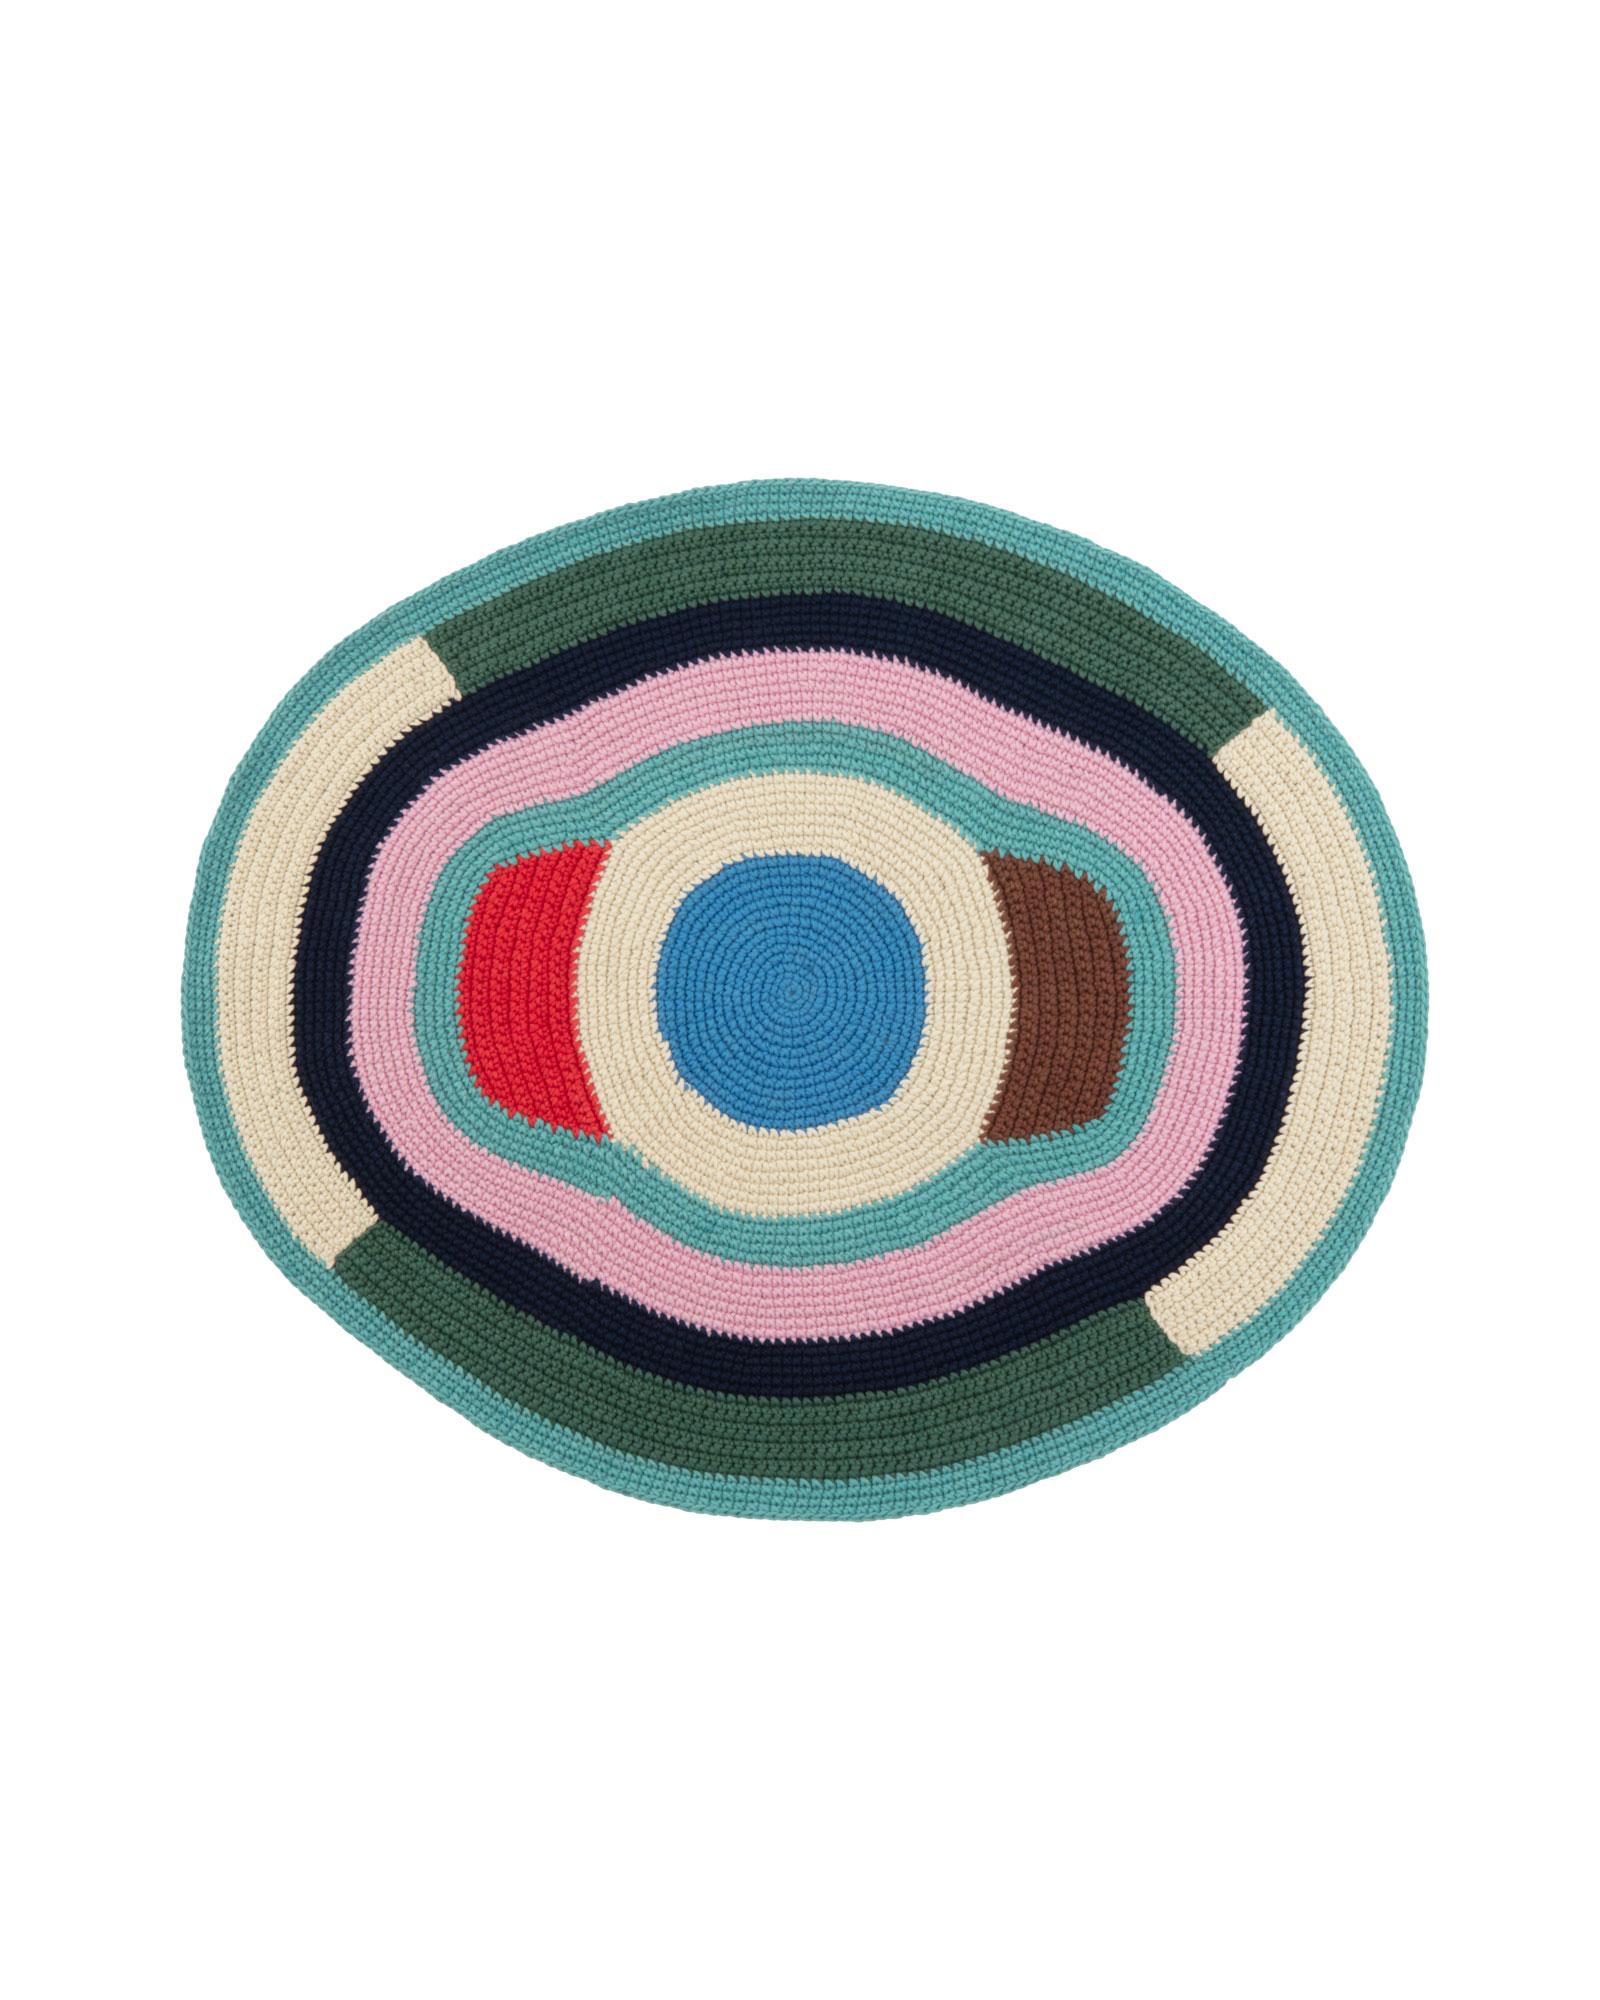 cc-tapis LOOPY OVAL handmade rug by Clara von Zweigbergk For Sale